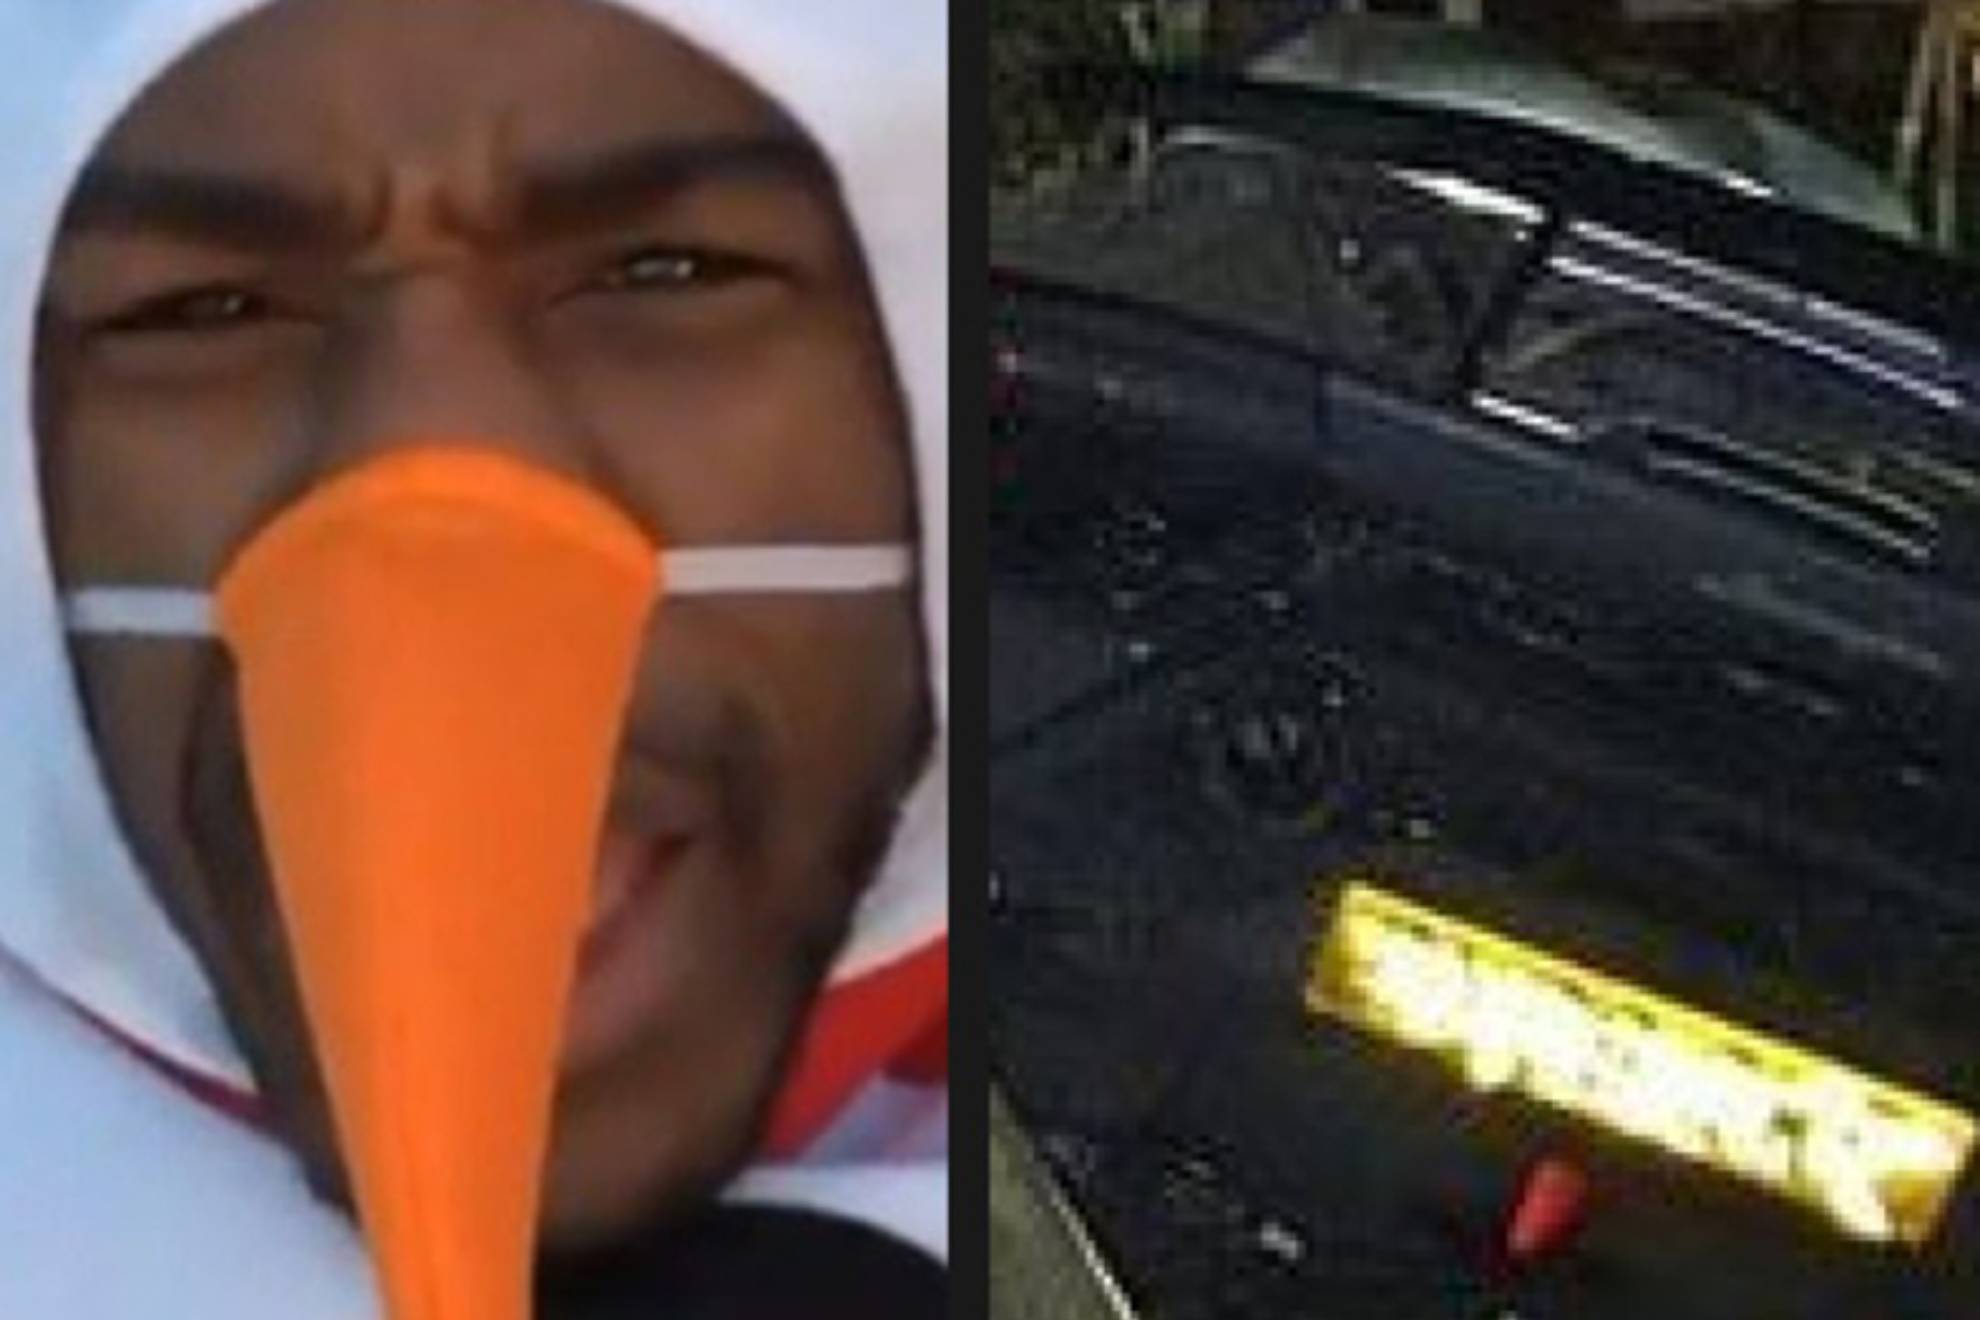 Footballer explains how he crashed his 242,000 euro Lamborghini dressed as a snowman: I s*** myself